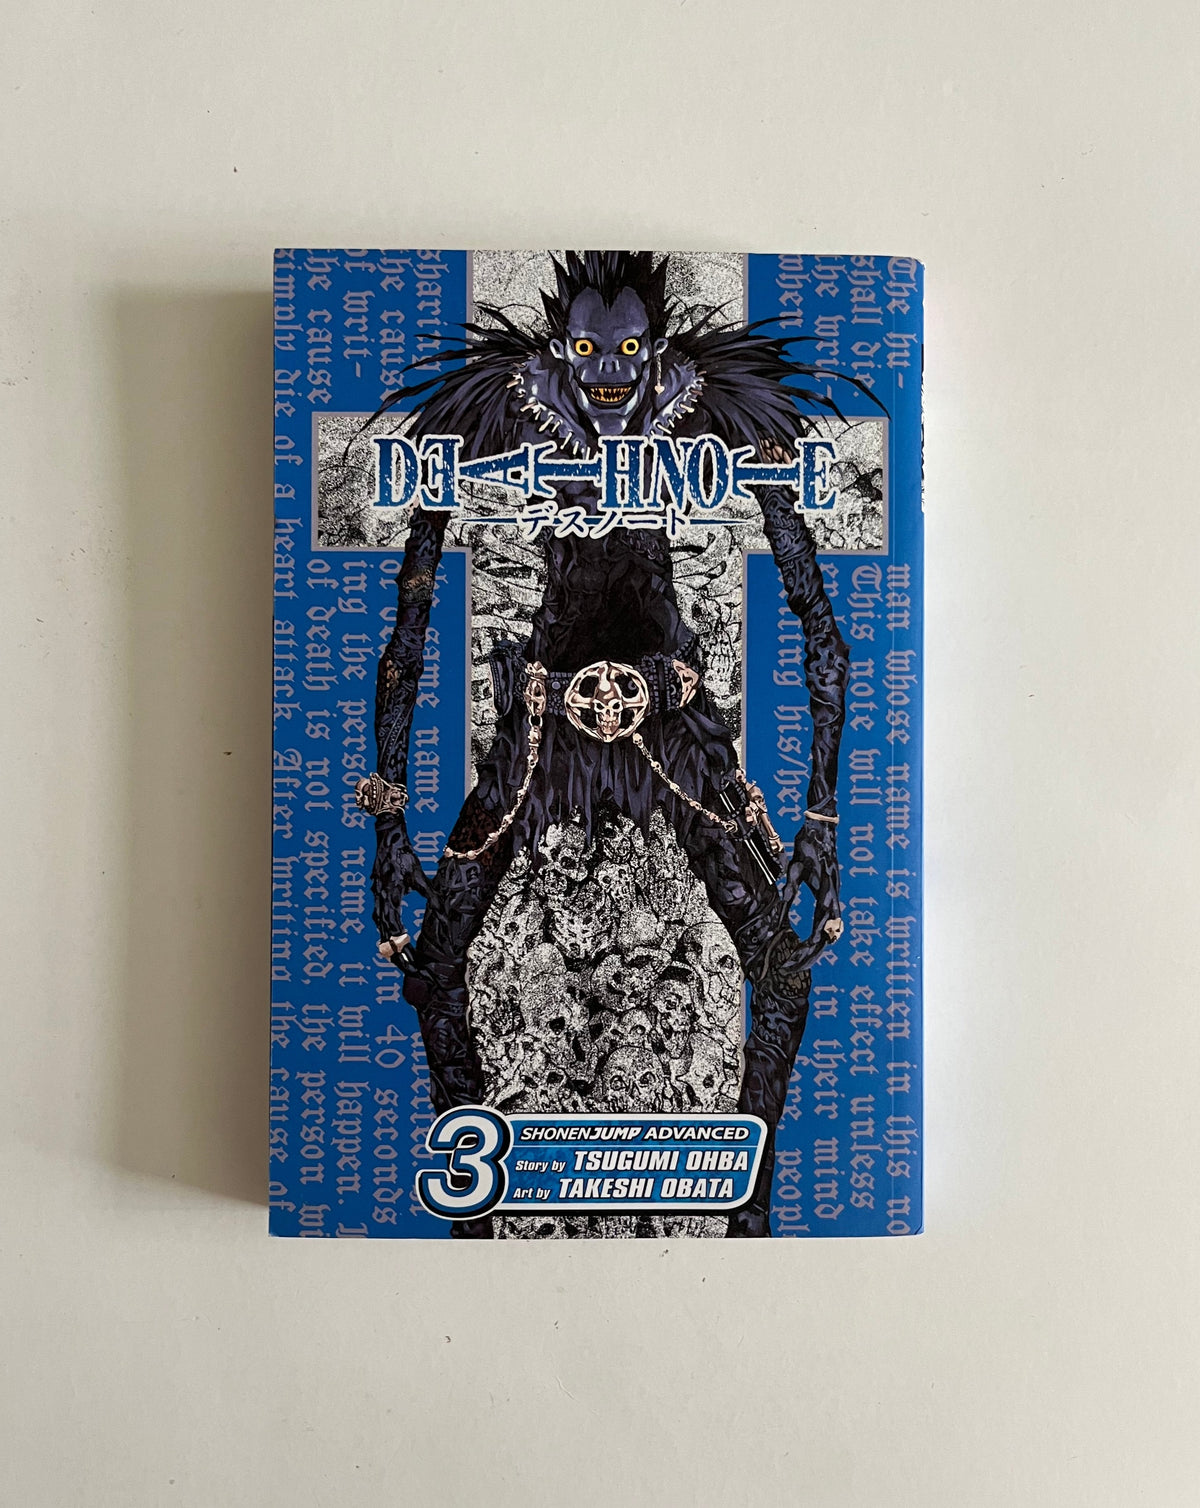 Deathnote 3 by Tsugumi Ohba &amp; Takeshi Obata